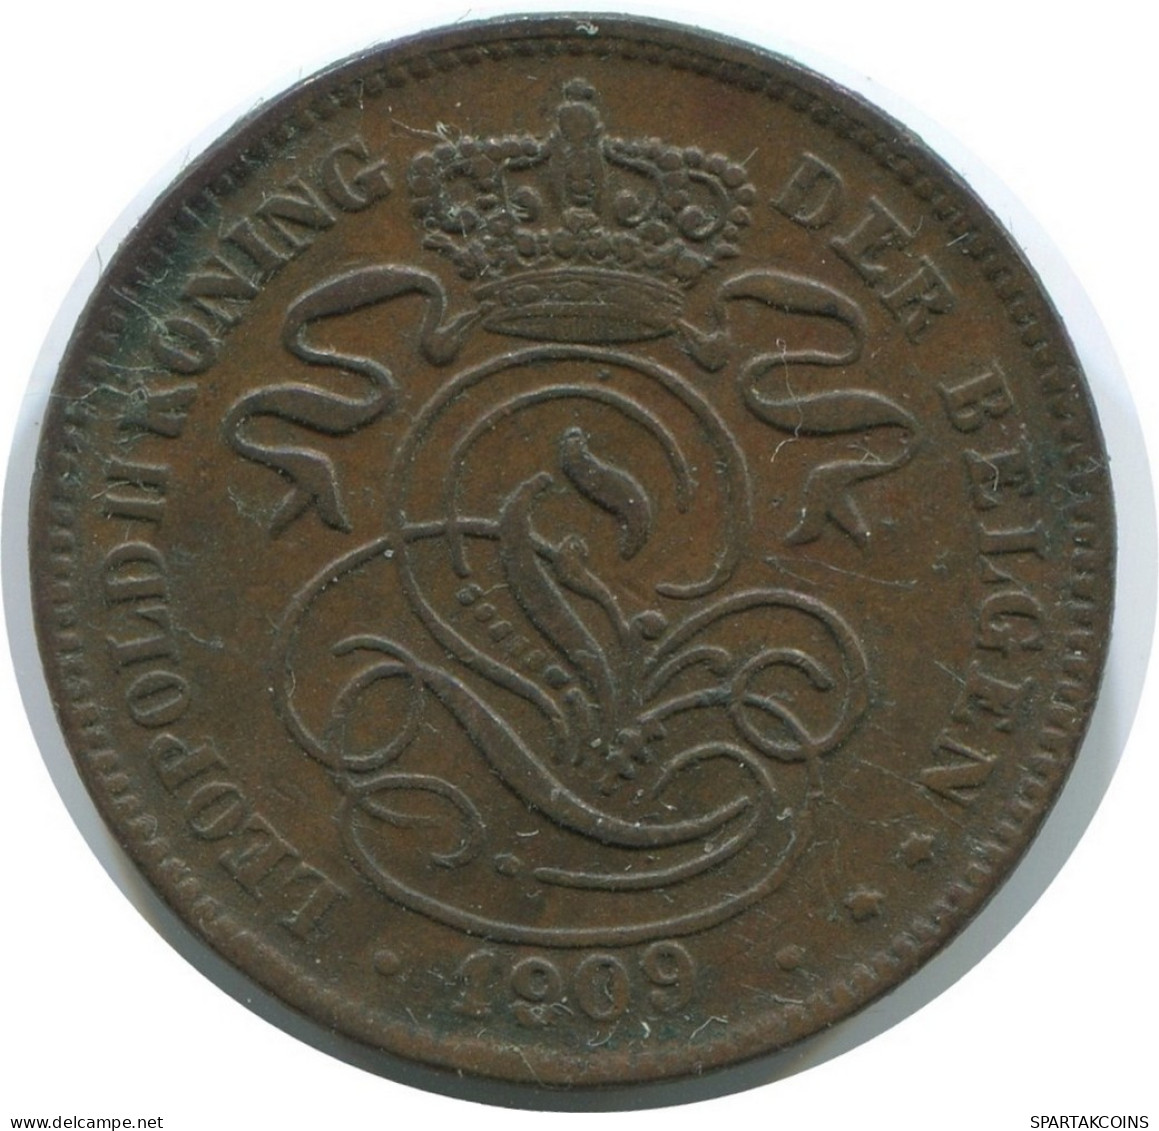 2 CENTIMES 1909 DUTCH Text BELGIUM Coin I #AE748.16.U - 2 Cents